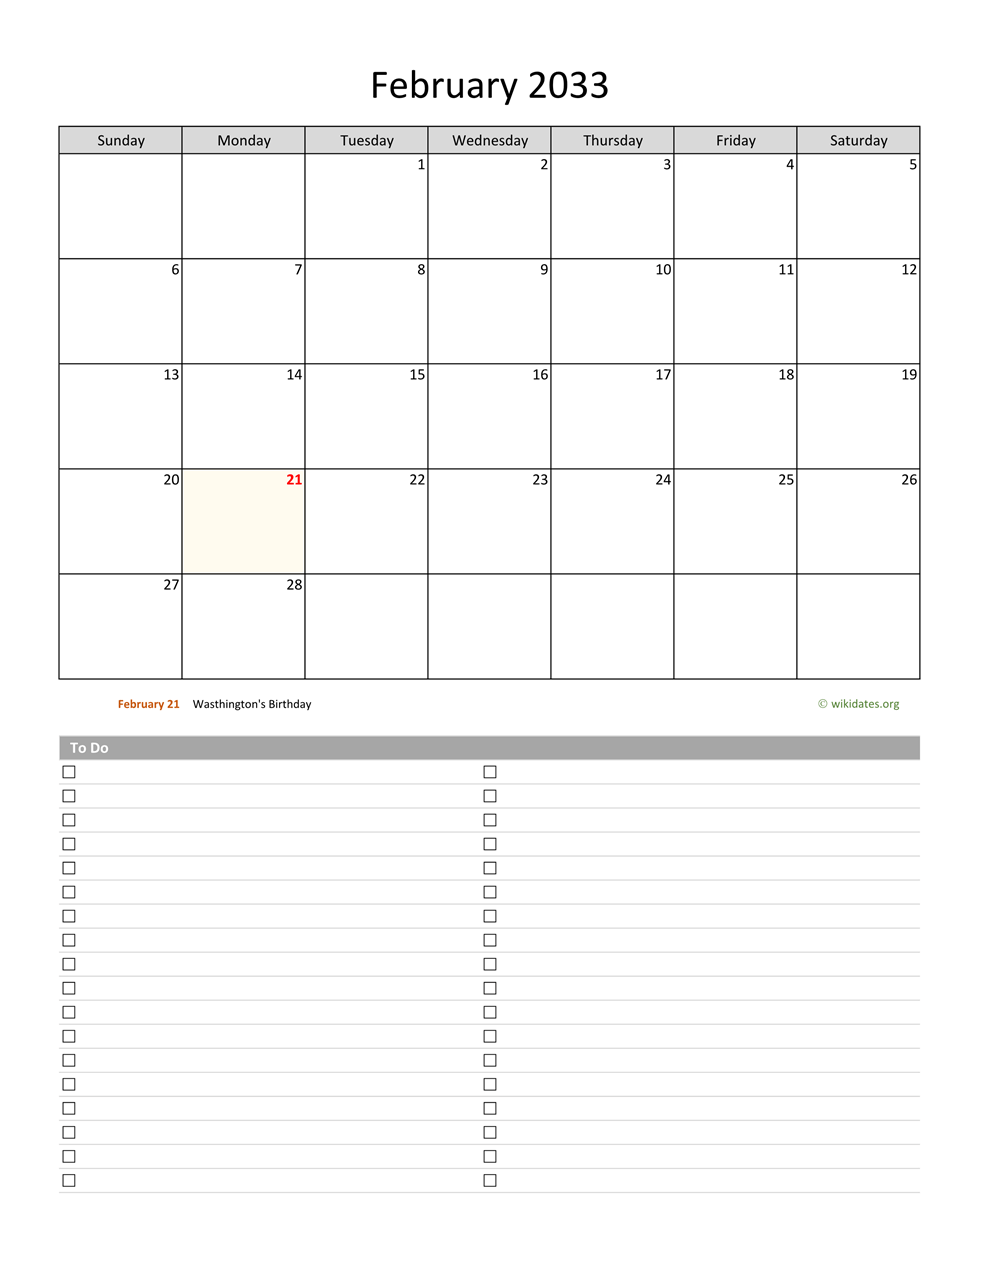 February 2033 Calendar With To Do List